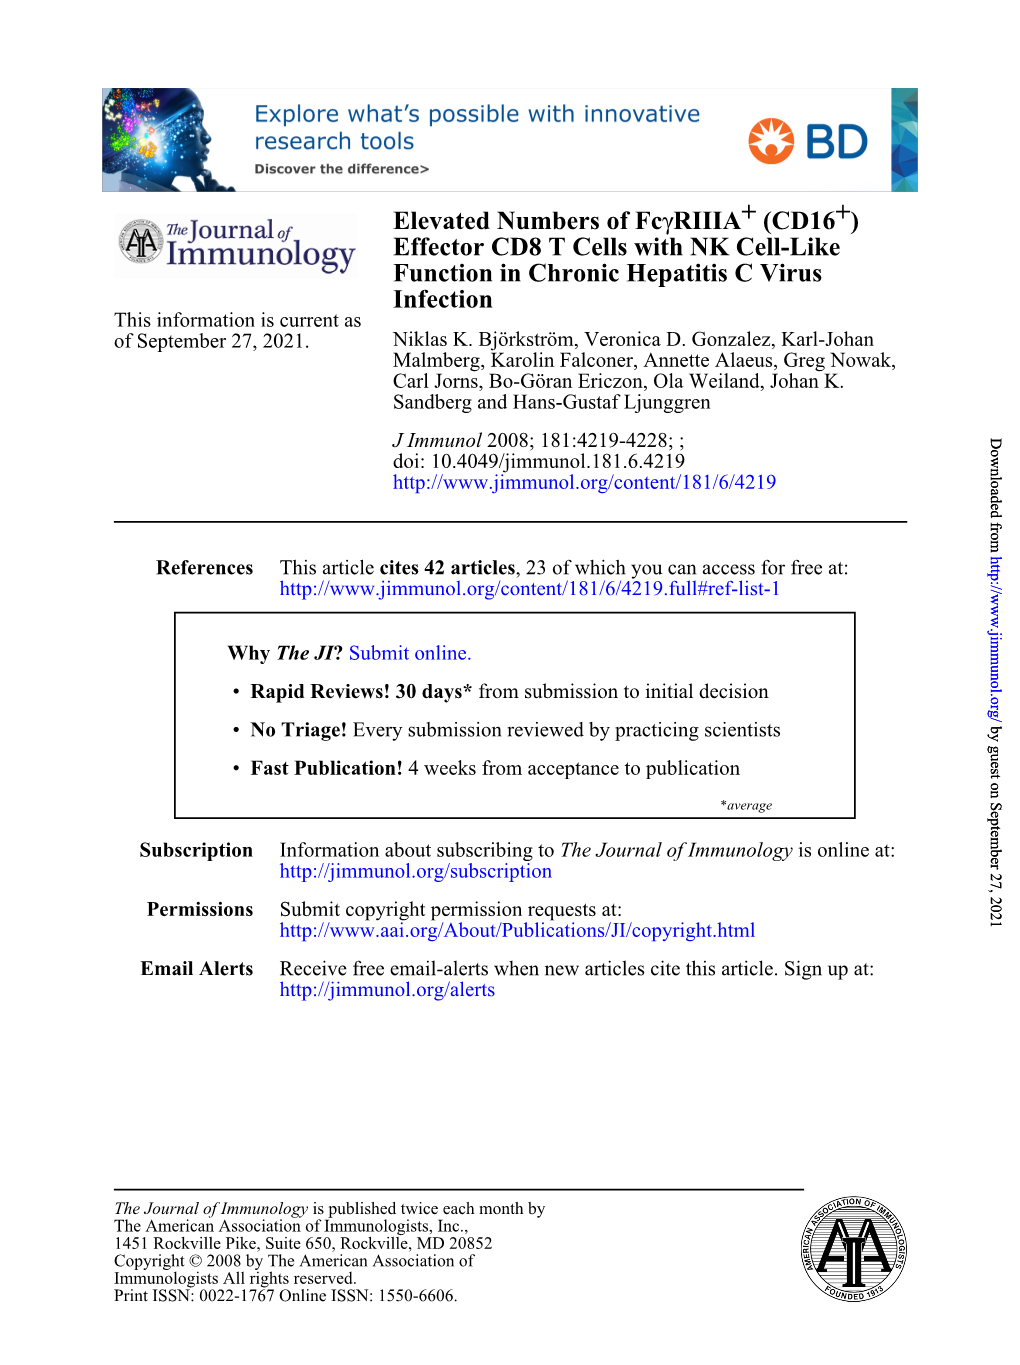 Infection Function in Chronic Hepatitis C Virus Effector CD8 T Cells With